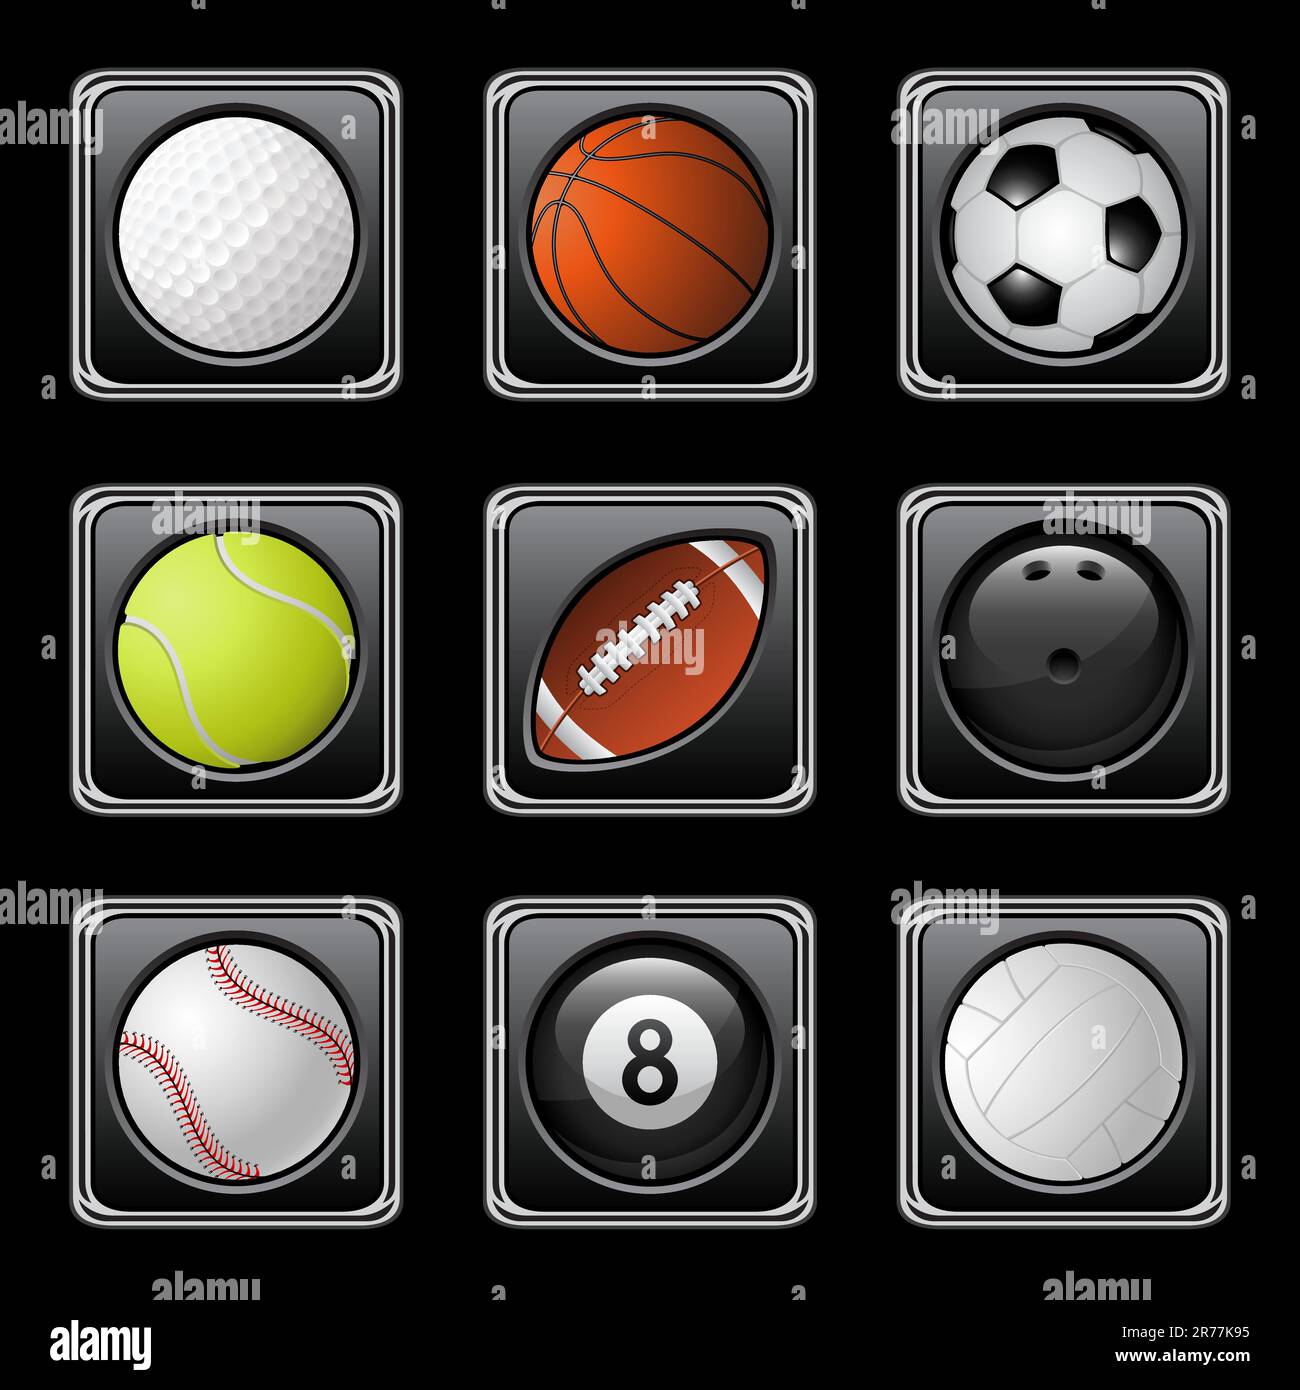 Sports balls icons. Vector illustration. Stock Vector